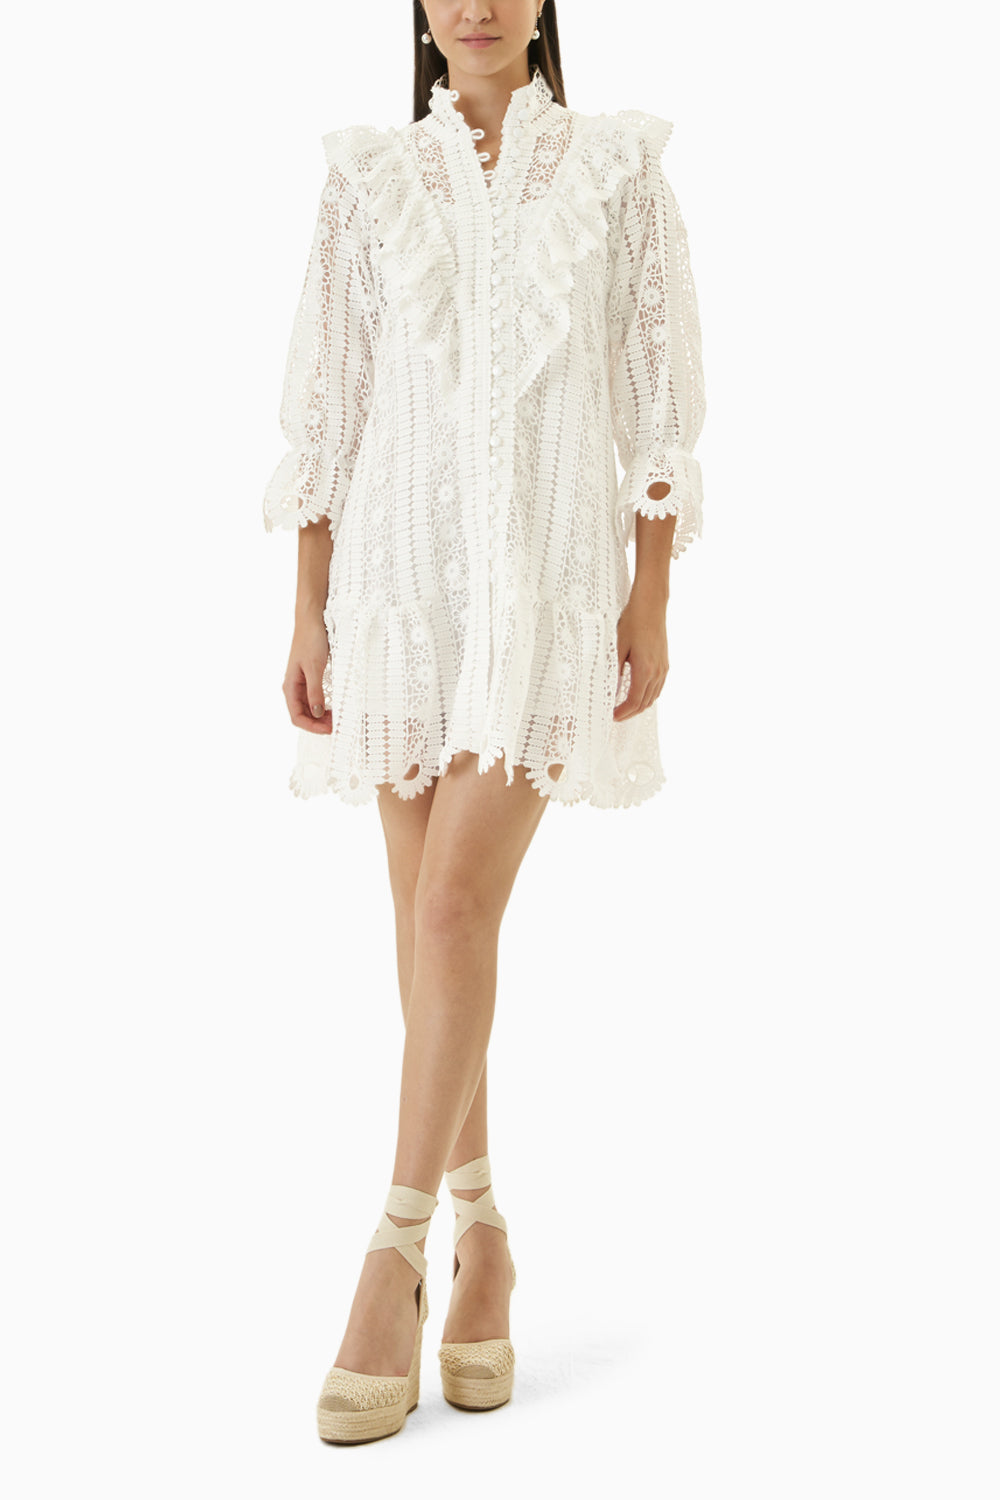 Celeste White Mini Dress